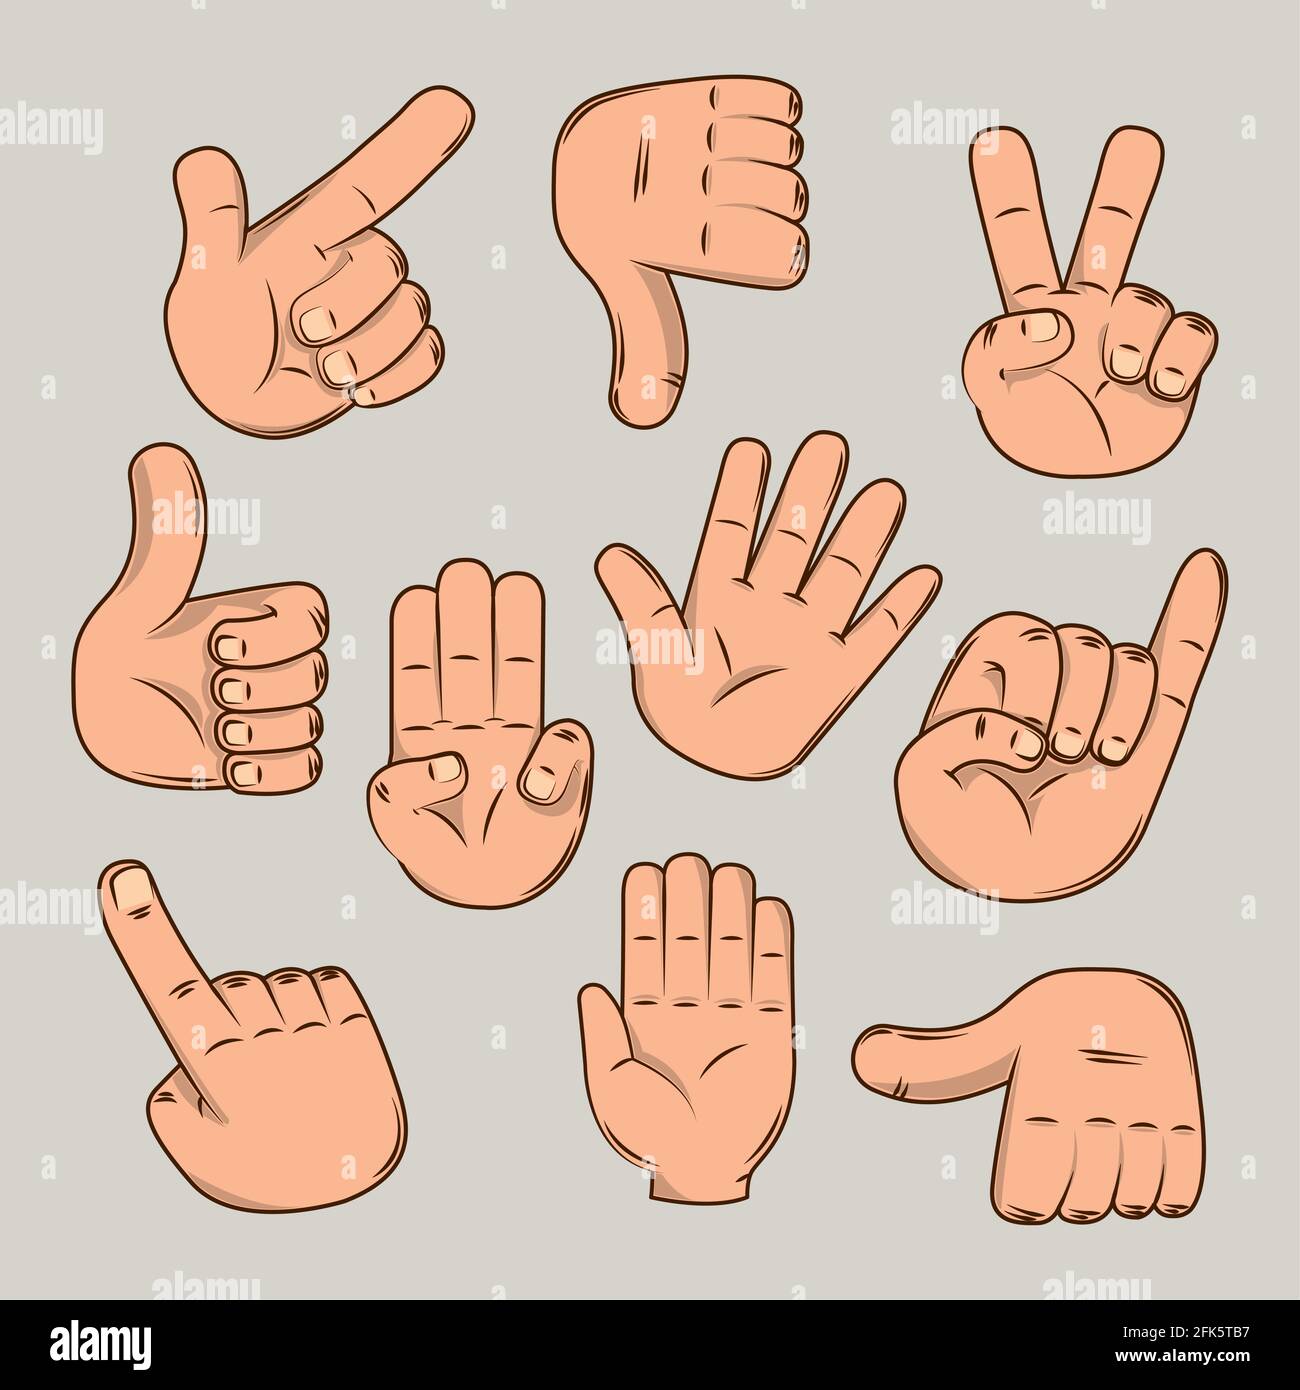 hand sign language icon set Stock Vector